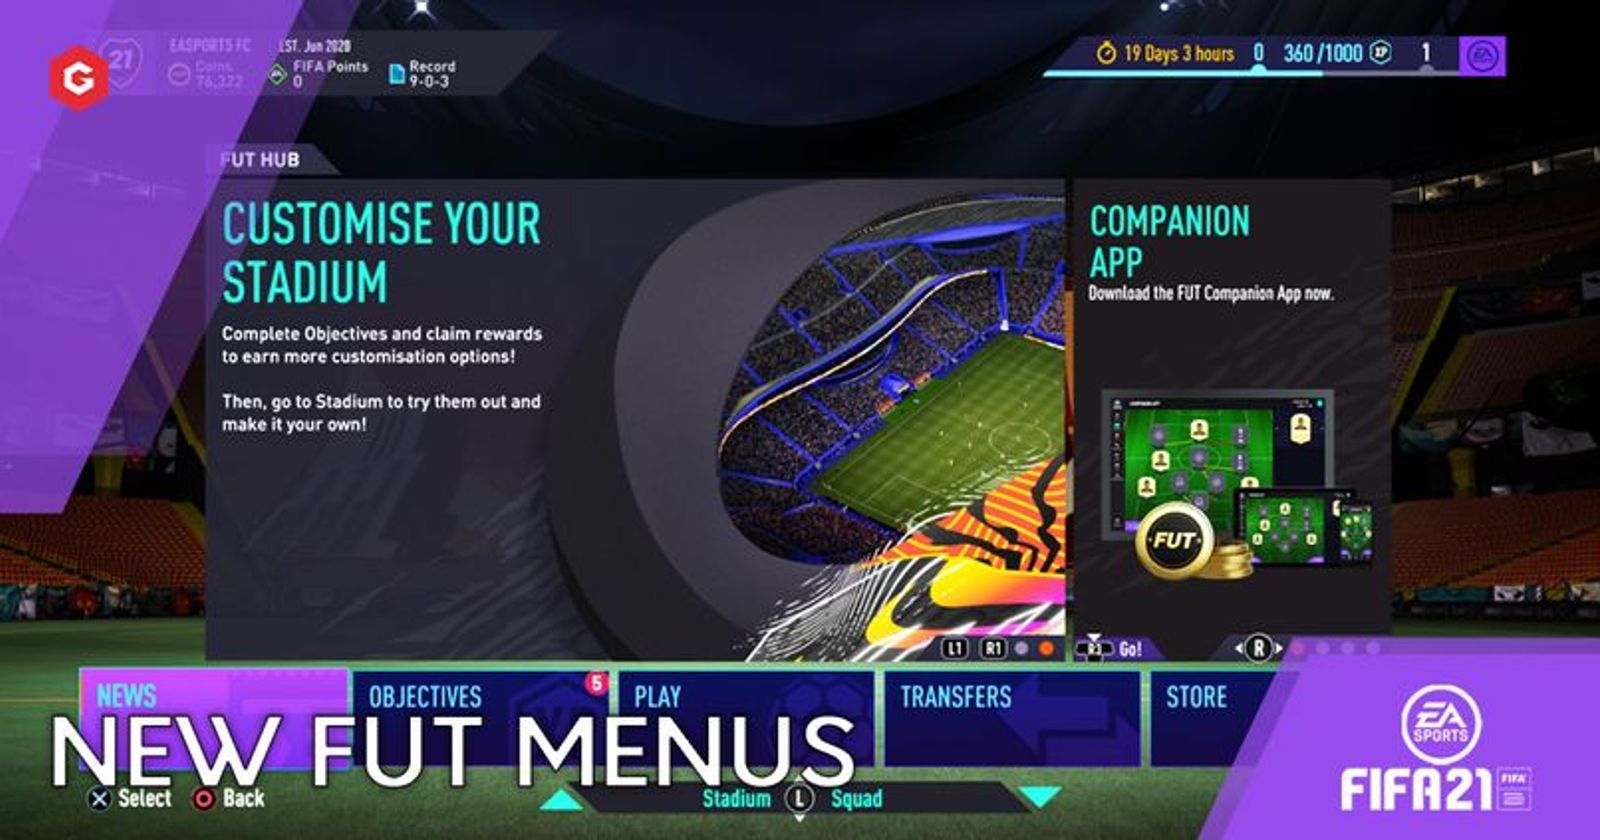 FIFA 21 Ultimate Team Web App, Unlimited Unassigned Items